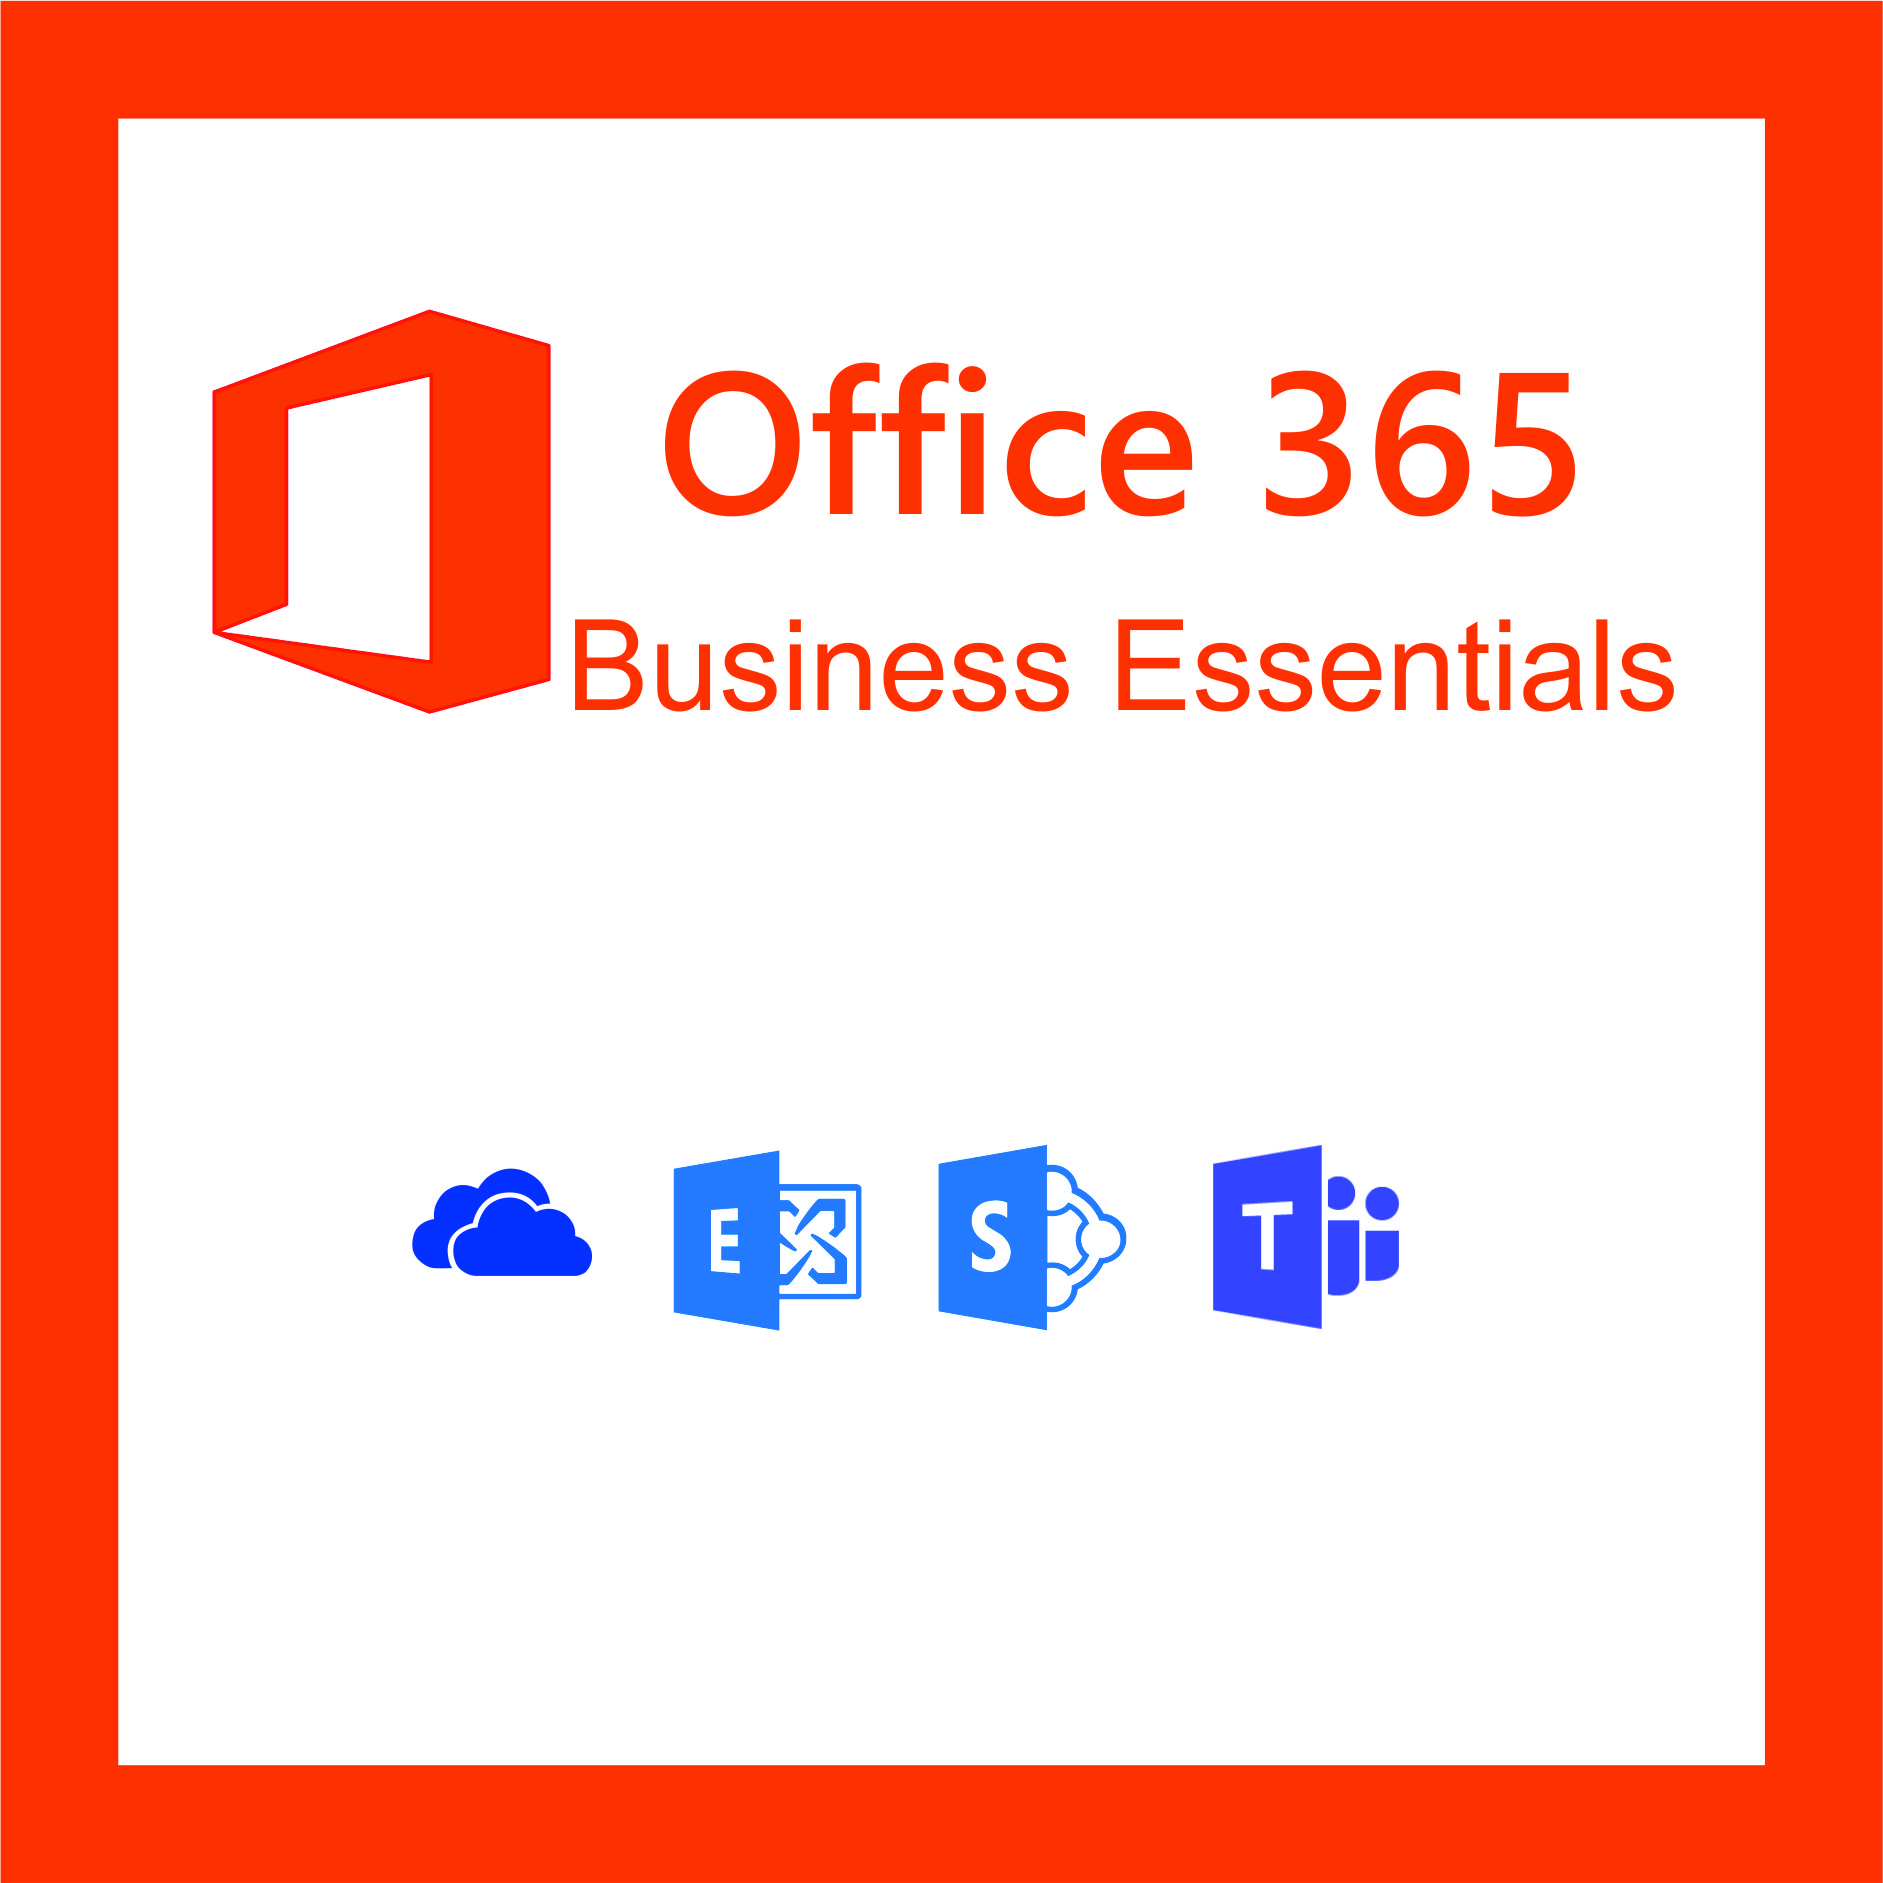 office 365 business essentials plan